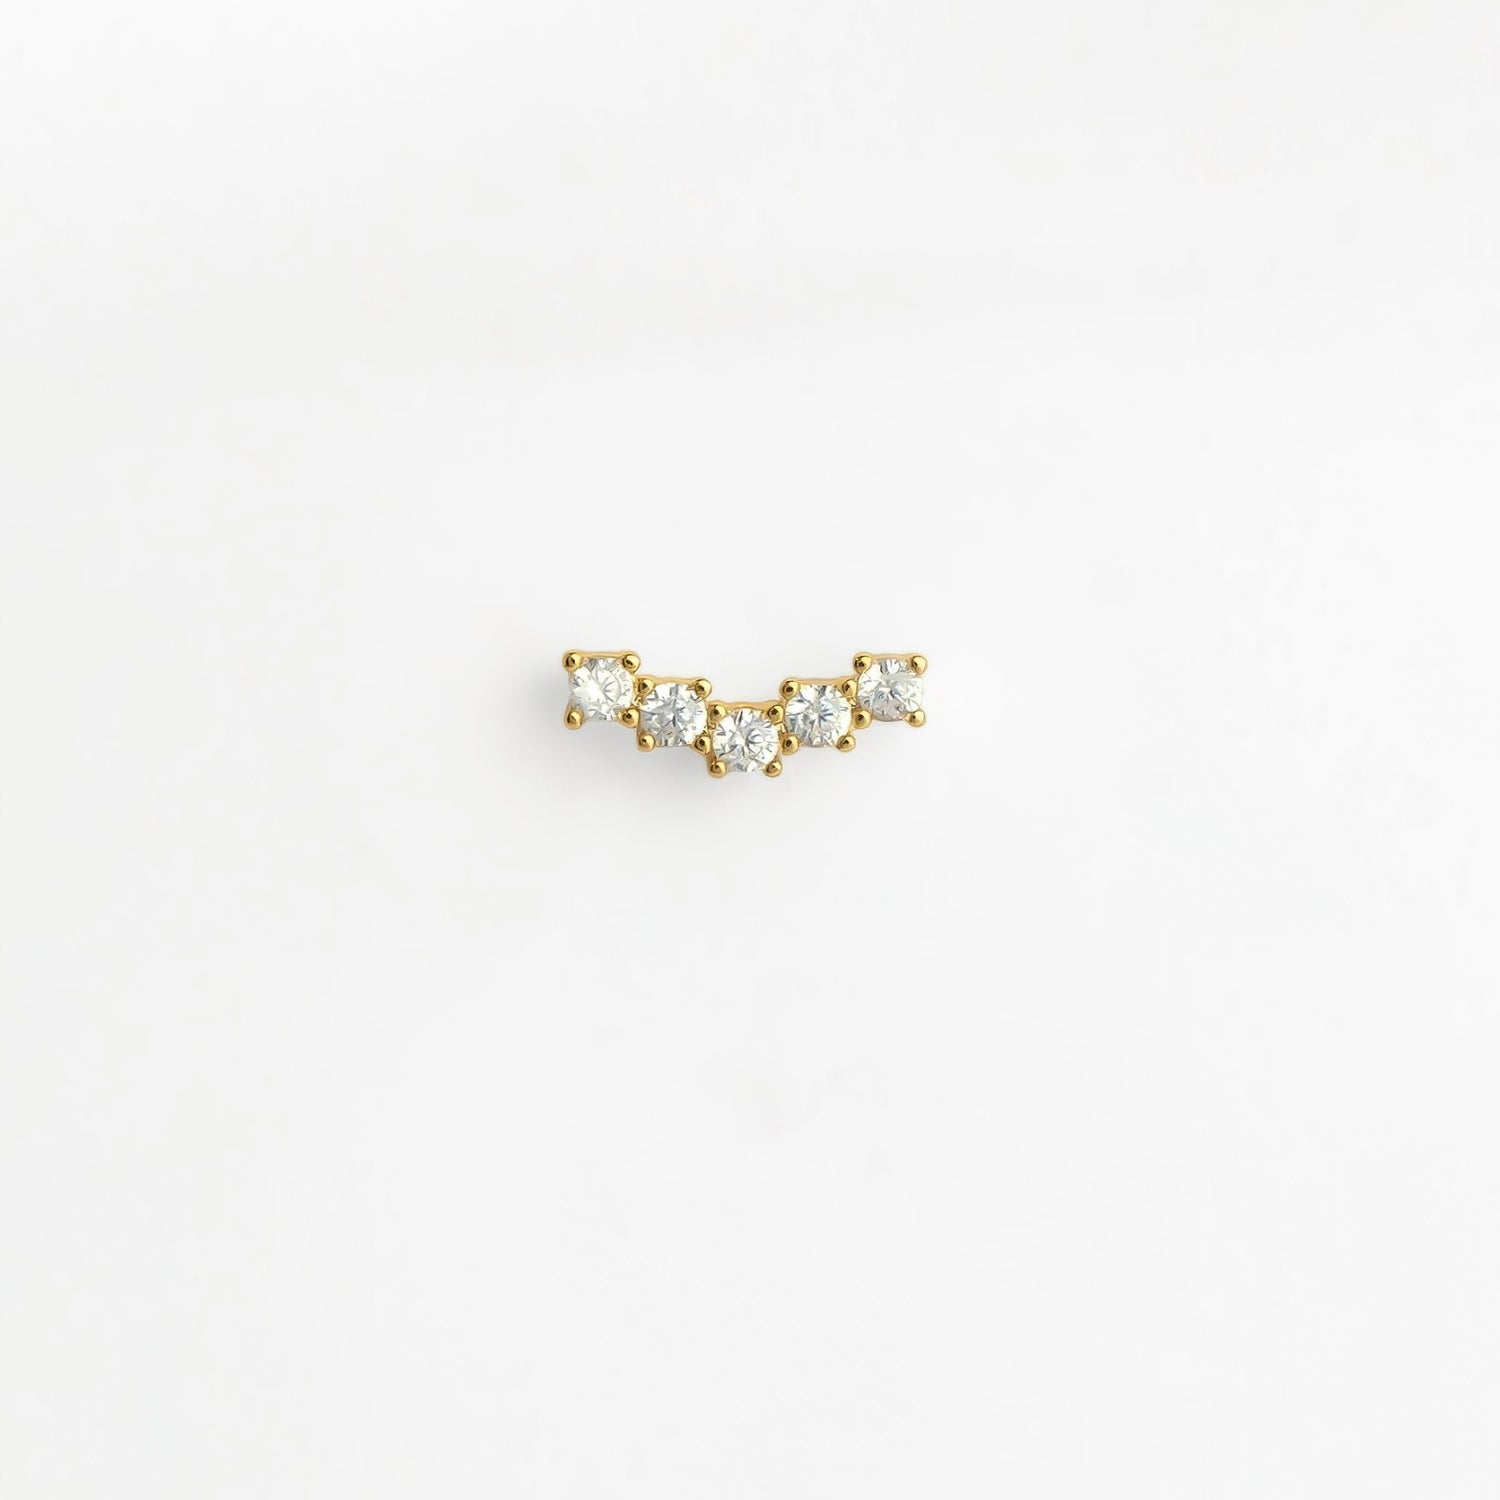 Anastasia piercing - gold/zircon